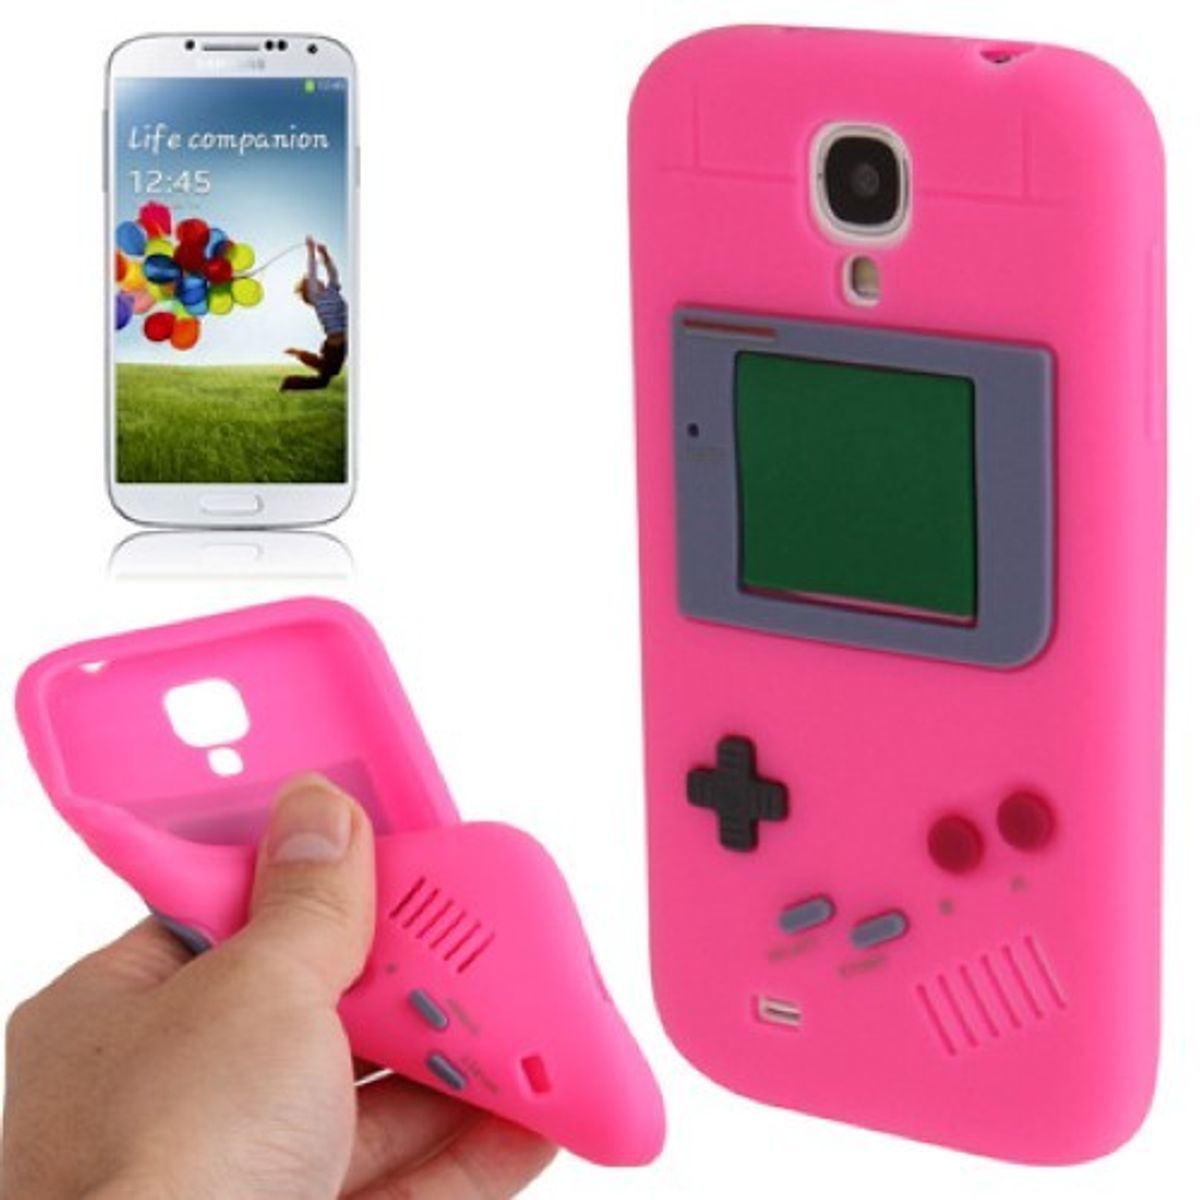 König Design Silikonhülle Gameboy für Samsung Galaxy S4 i9500 / i9505 / i9506 / Value Edition GT-I9515 pink